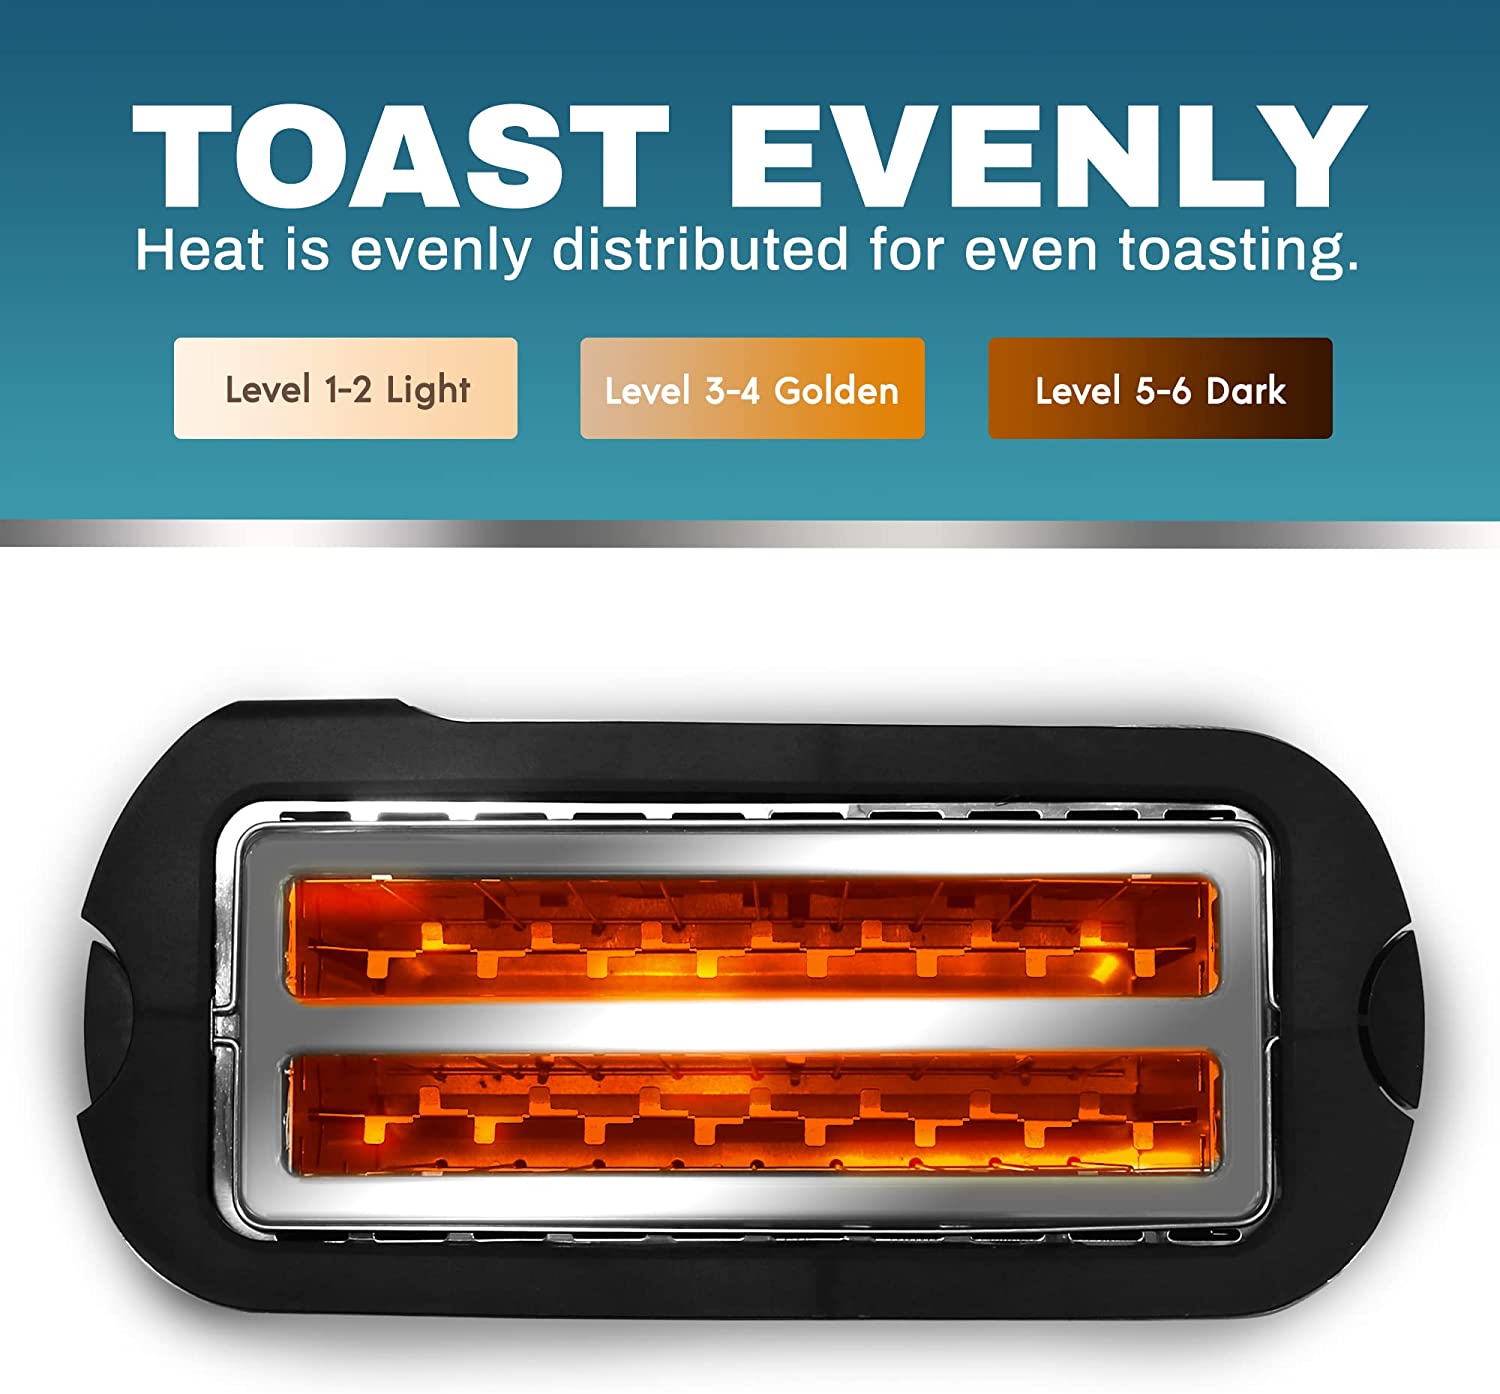 4-Slice Long Slot Toaster, Wide Slots